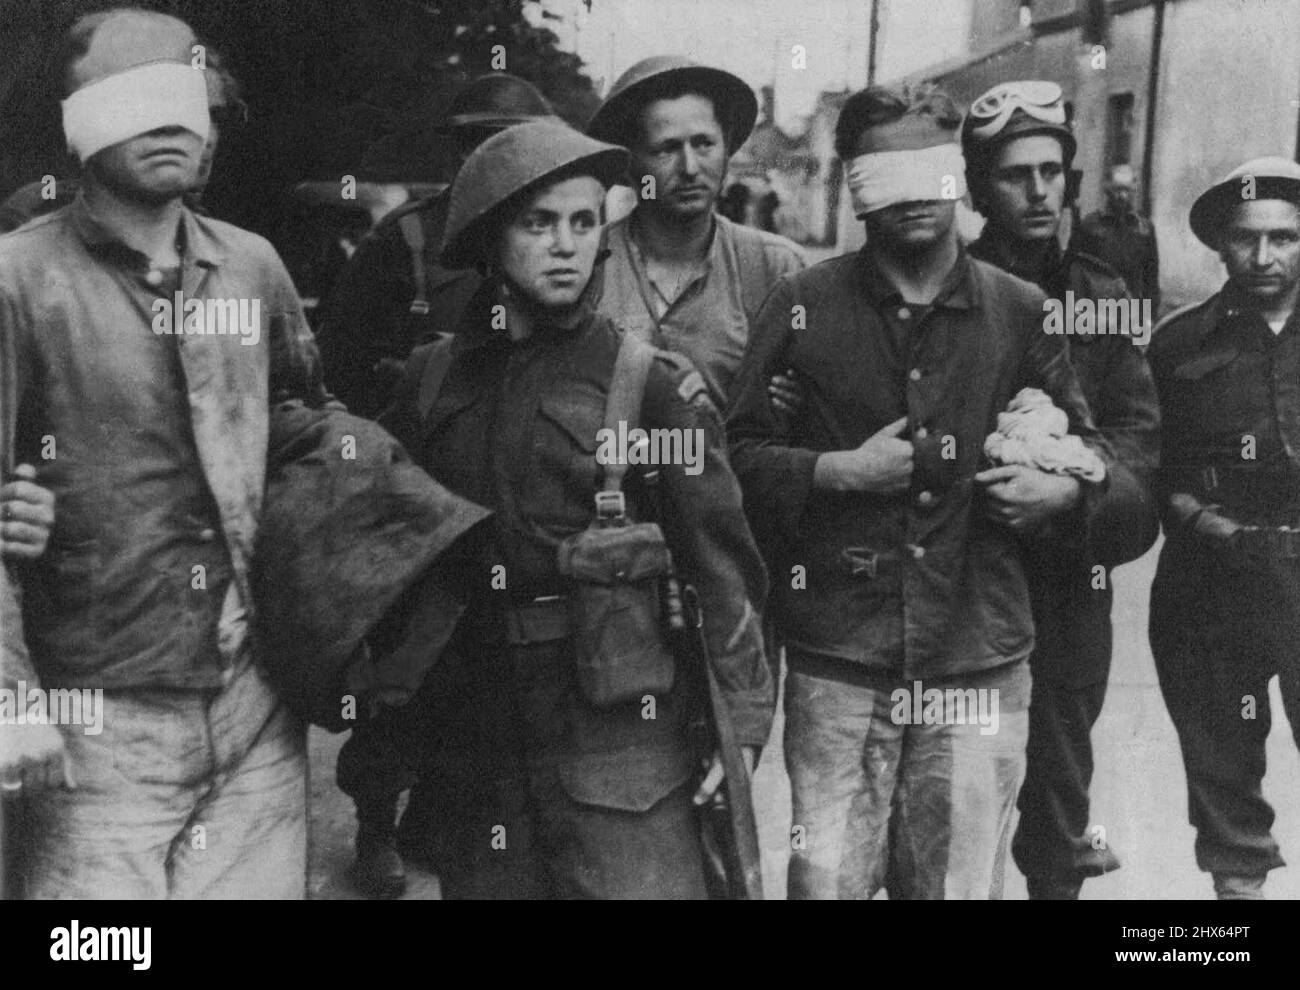 Blind folded sees rule prisoners taken by British ***** England. October 4, 1942. (Photo by Keystone Press Agency Ltd.). Stock Photo